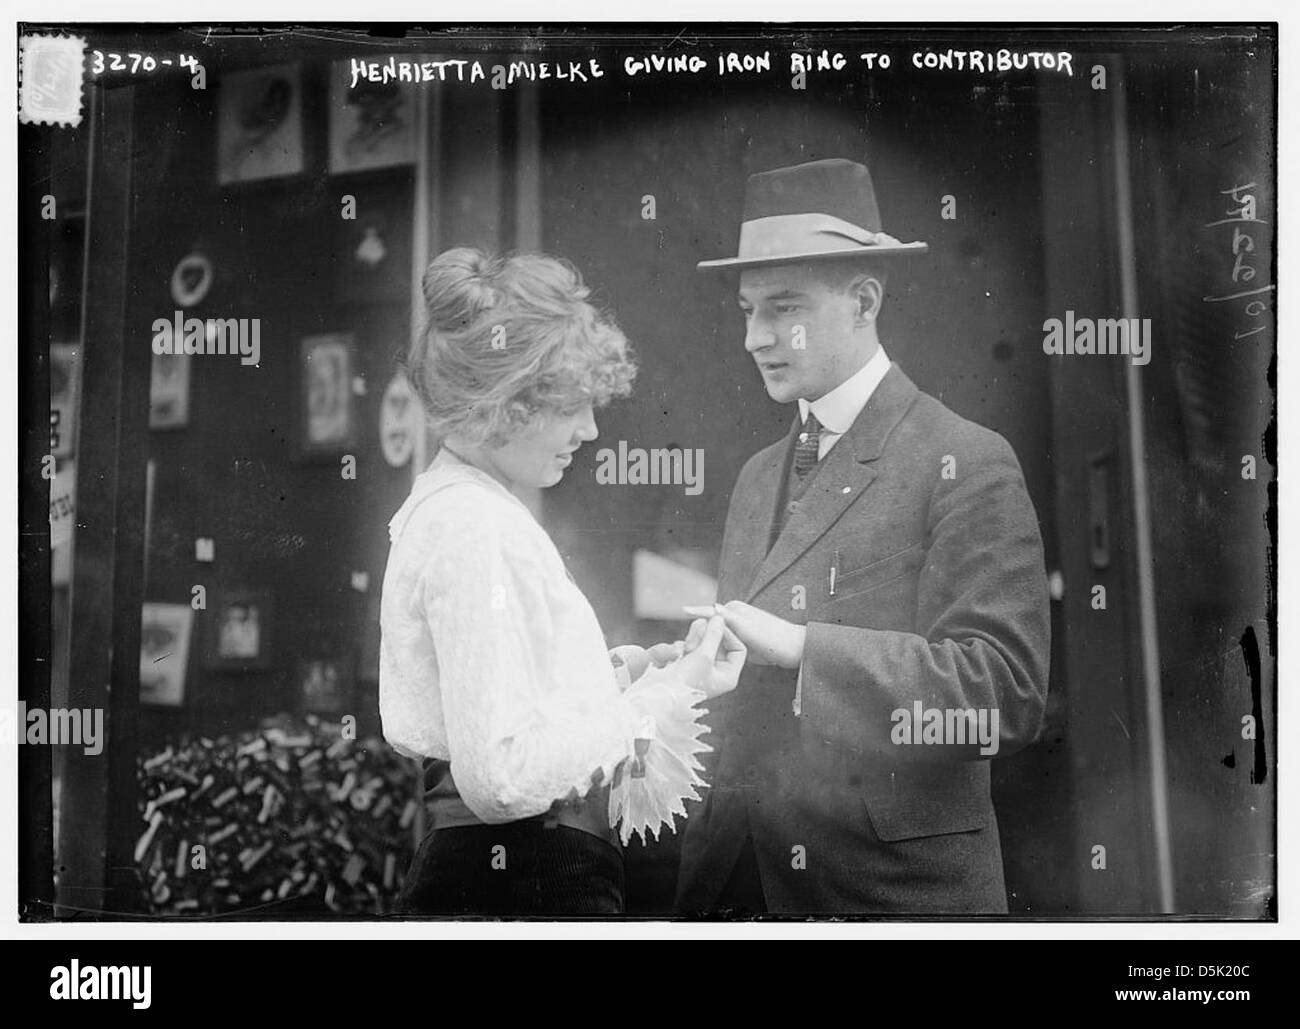 Henrietta Mielke giving iron ring to contributor (LOC) Stock Photo